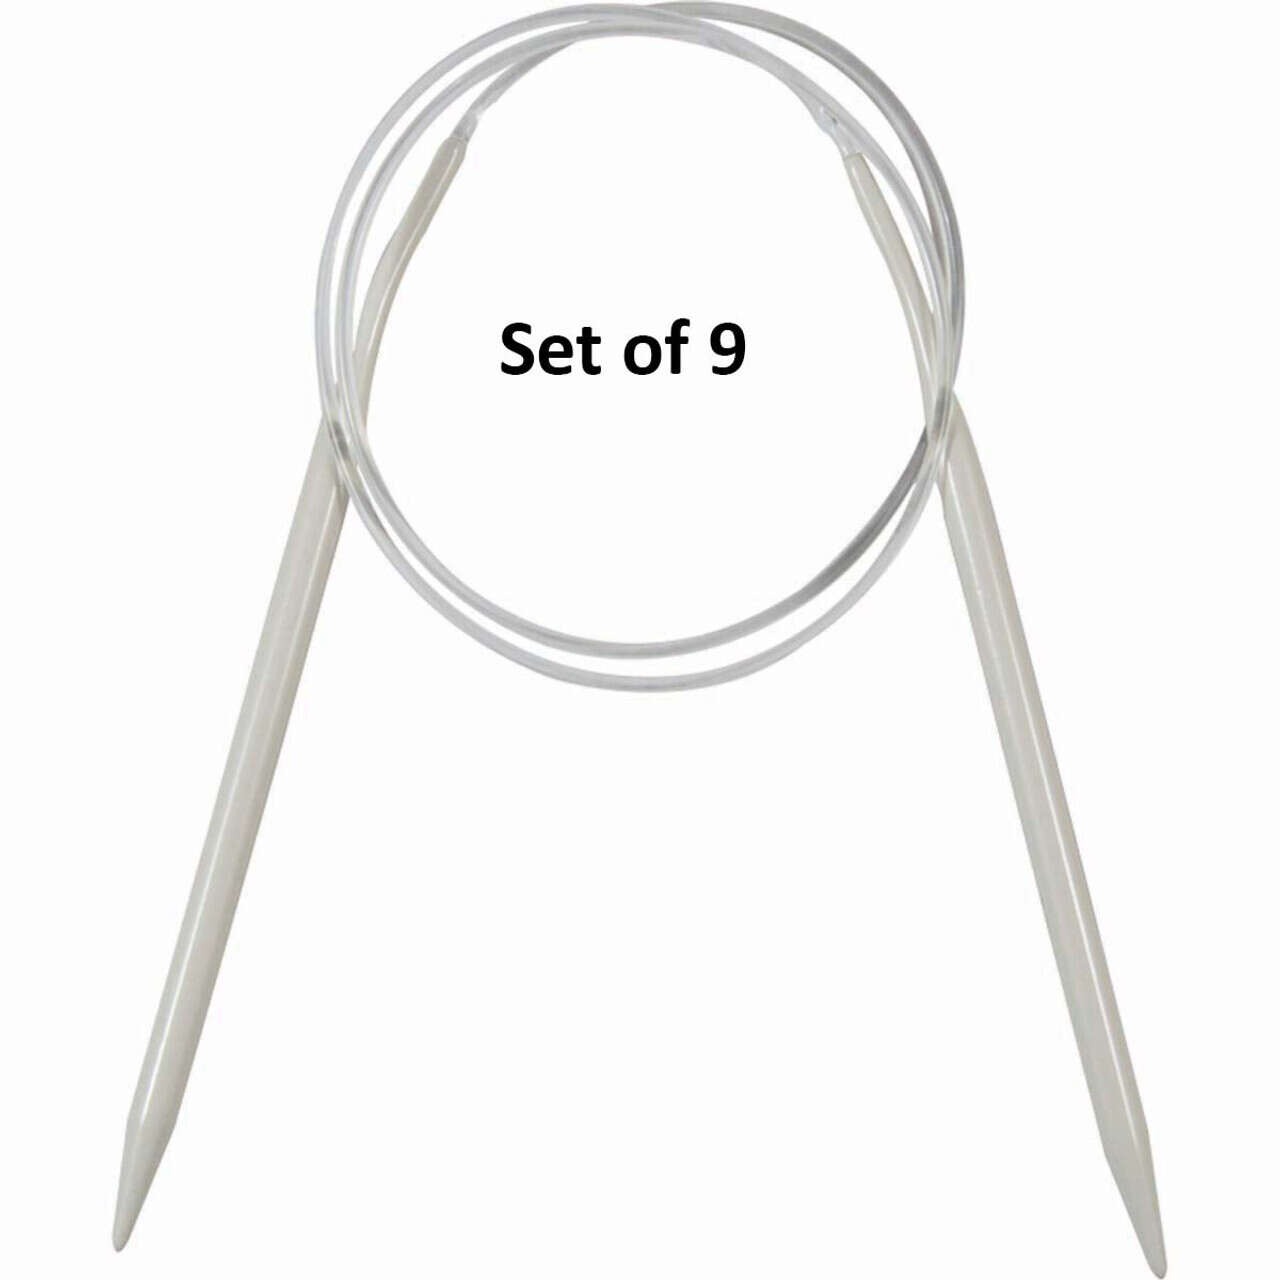 US size 8 (5mm) Circular Knitting Needles